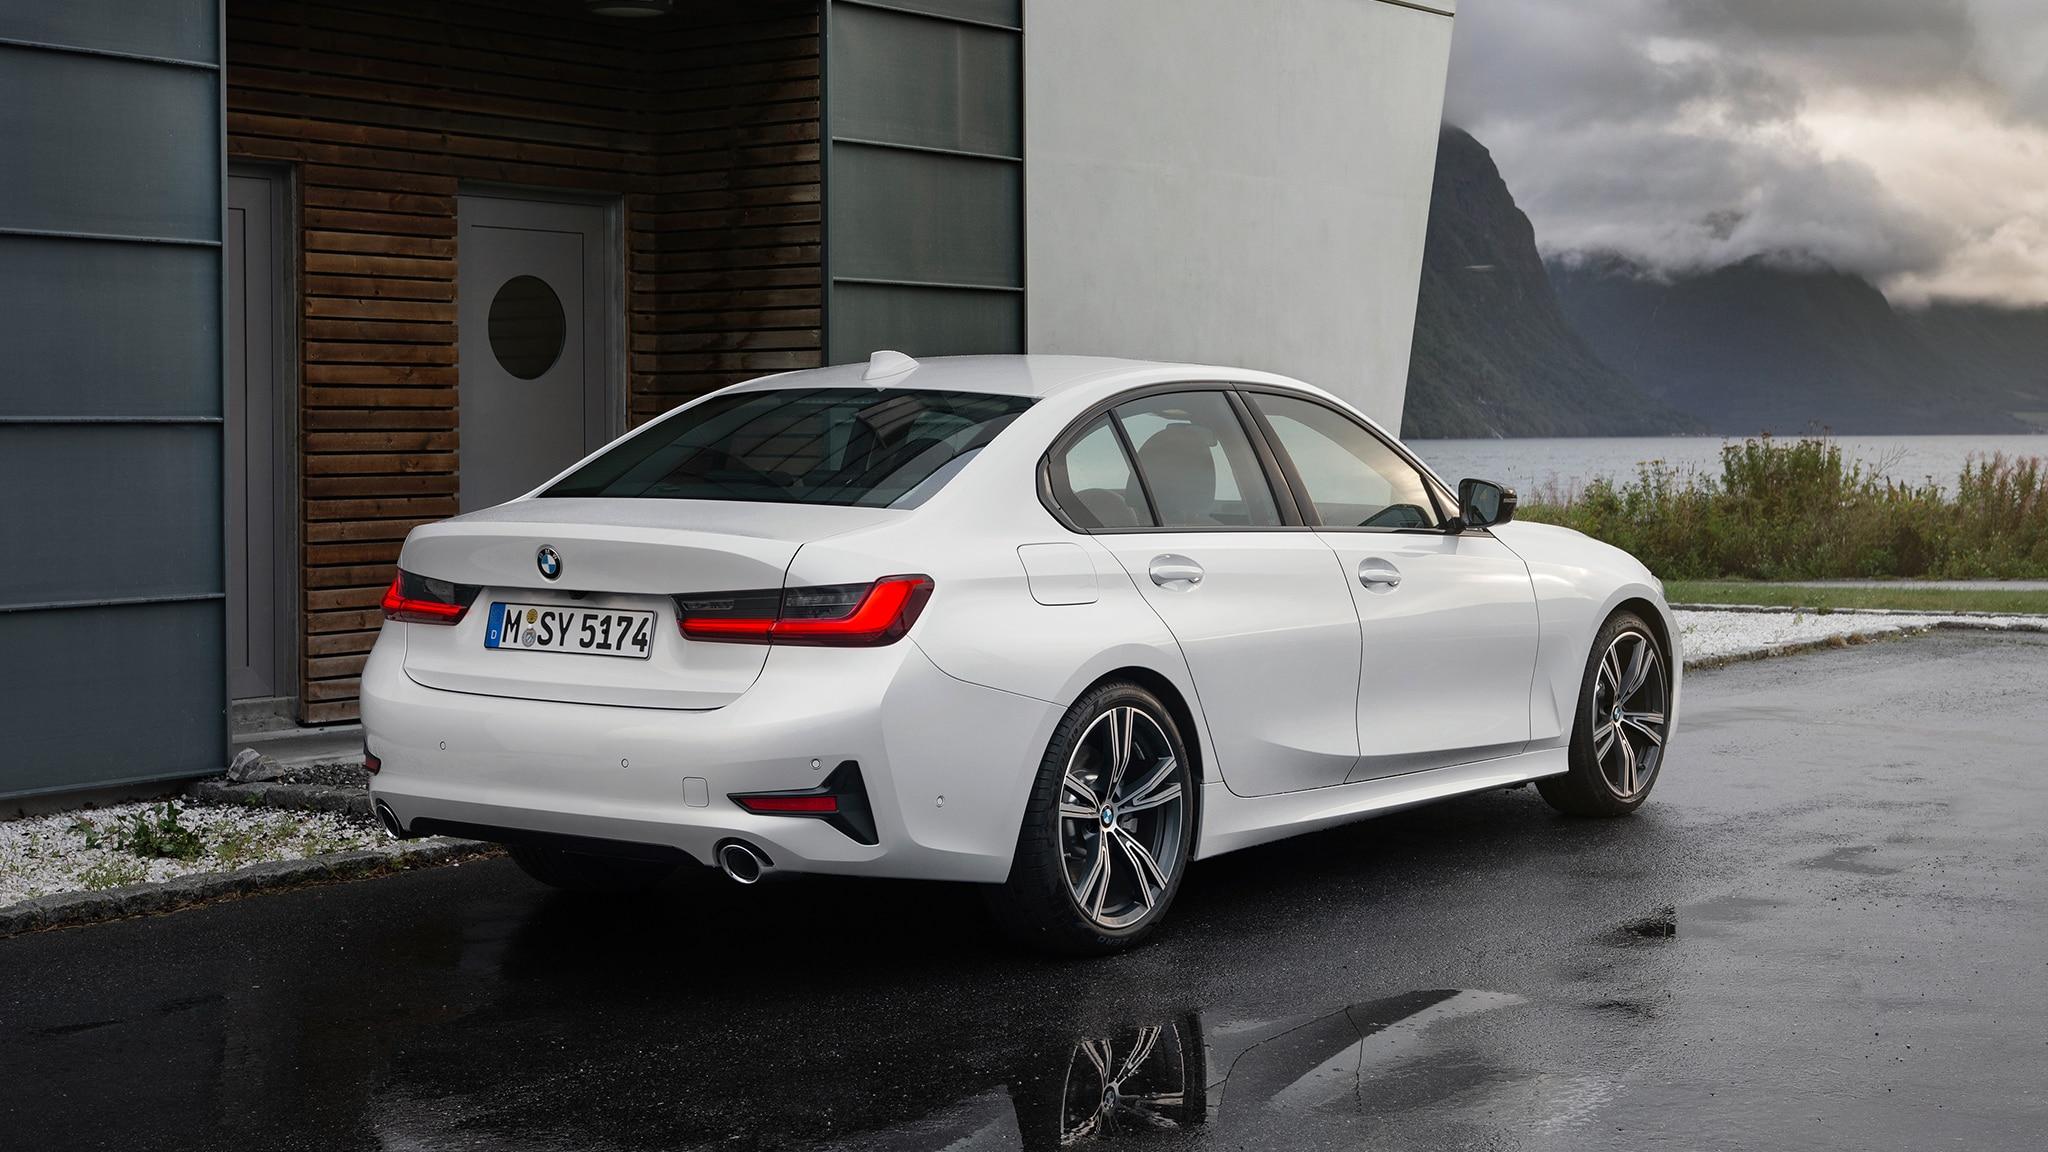 BMW 3 Series Design Analysis: Exterior, Interior, Details